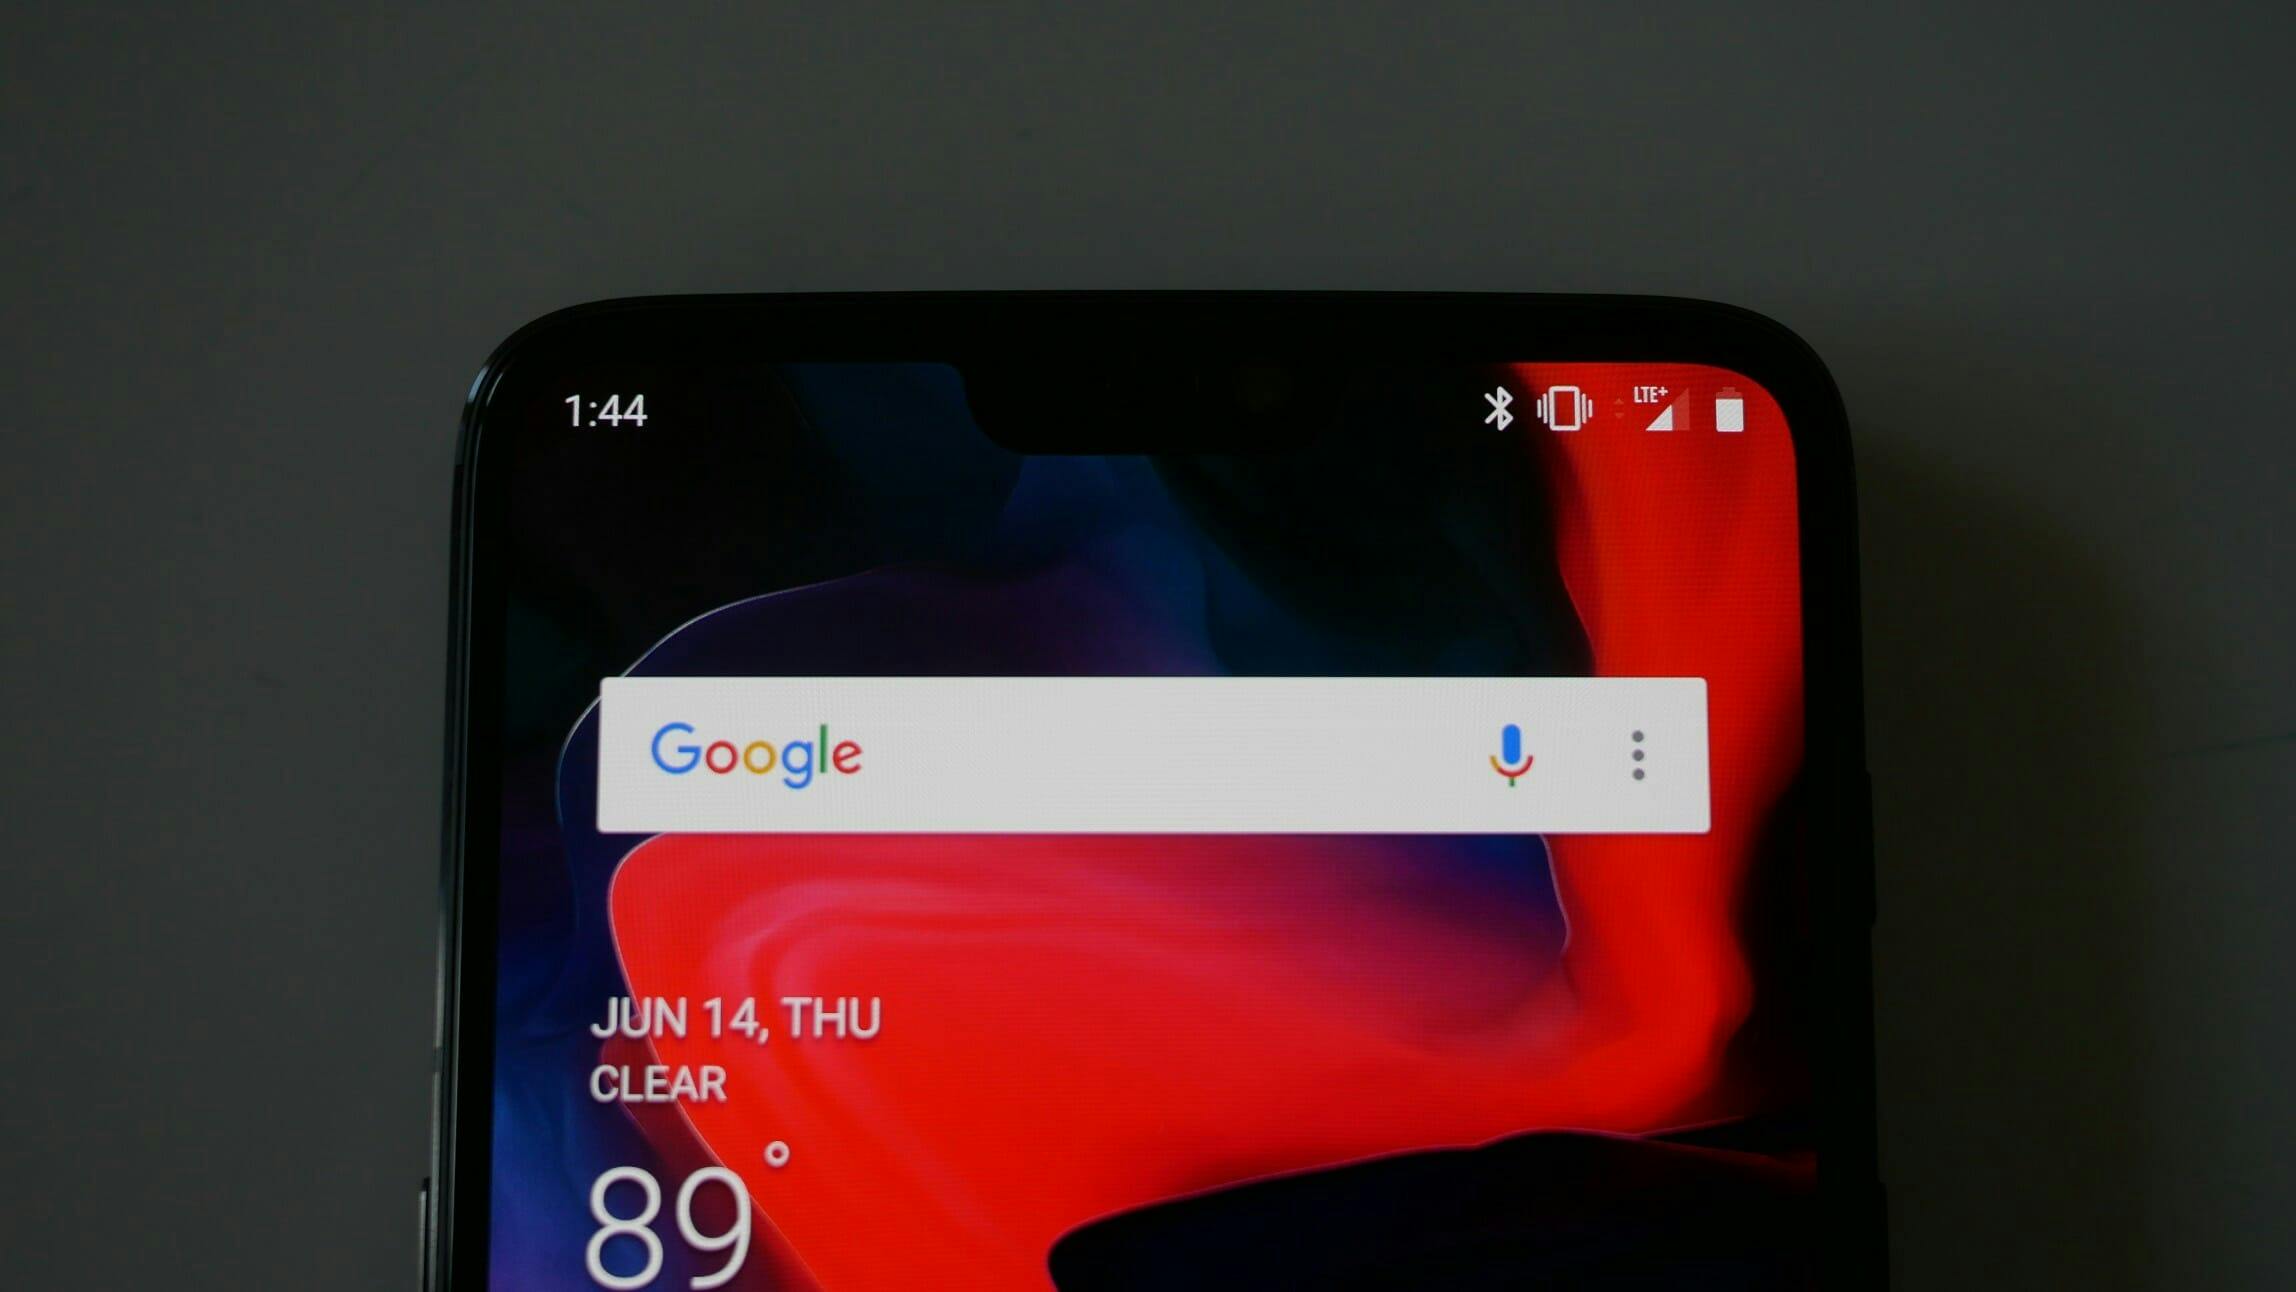 OnePlus 6 design - oneplus 6 display notch